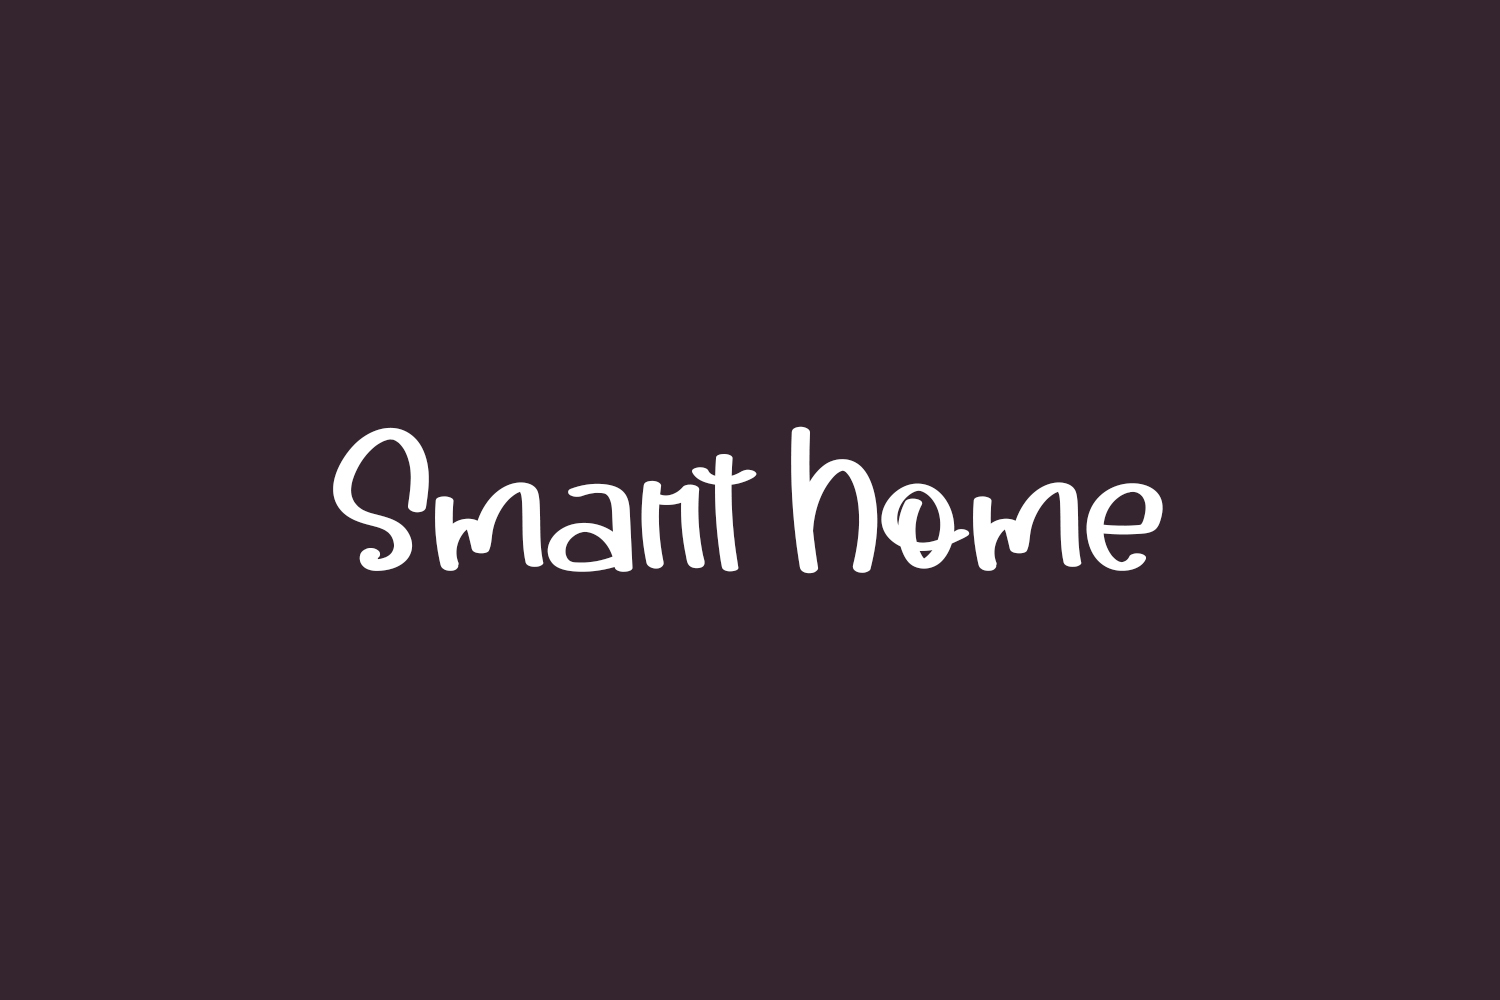 Smart Home Free Font